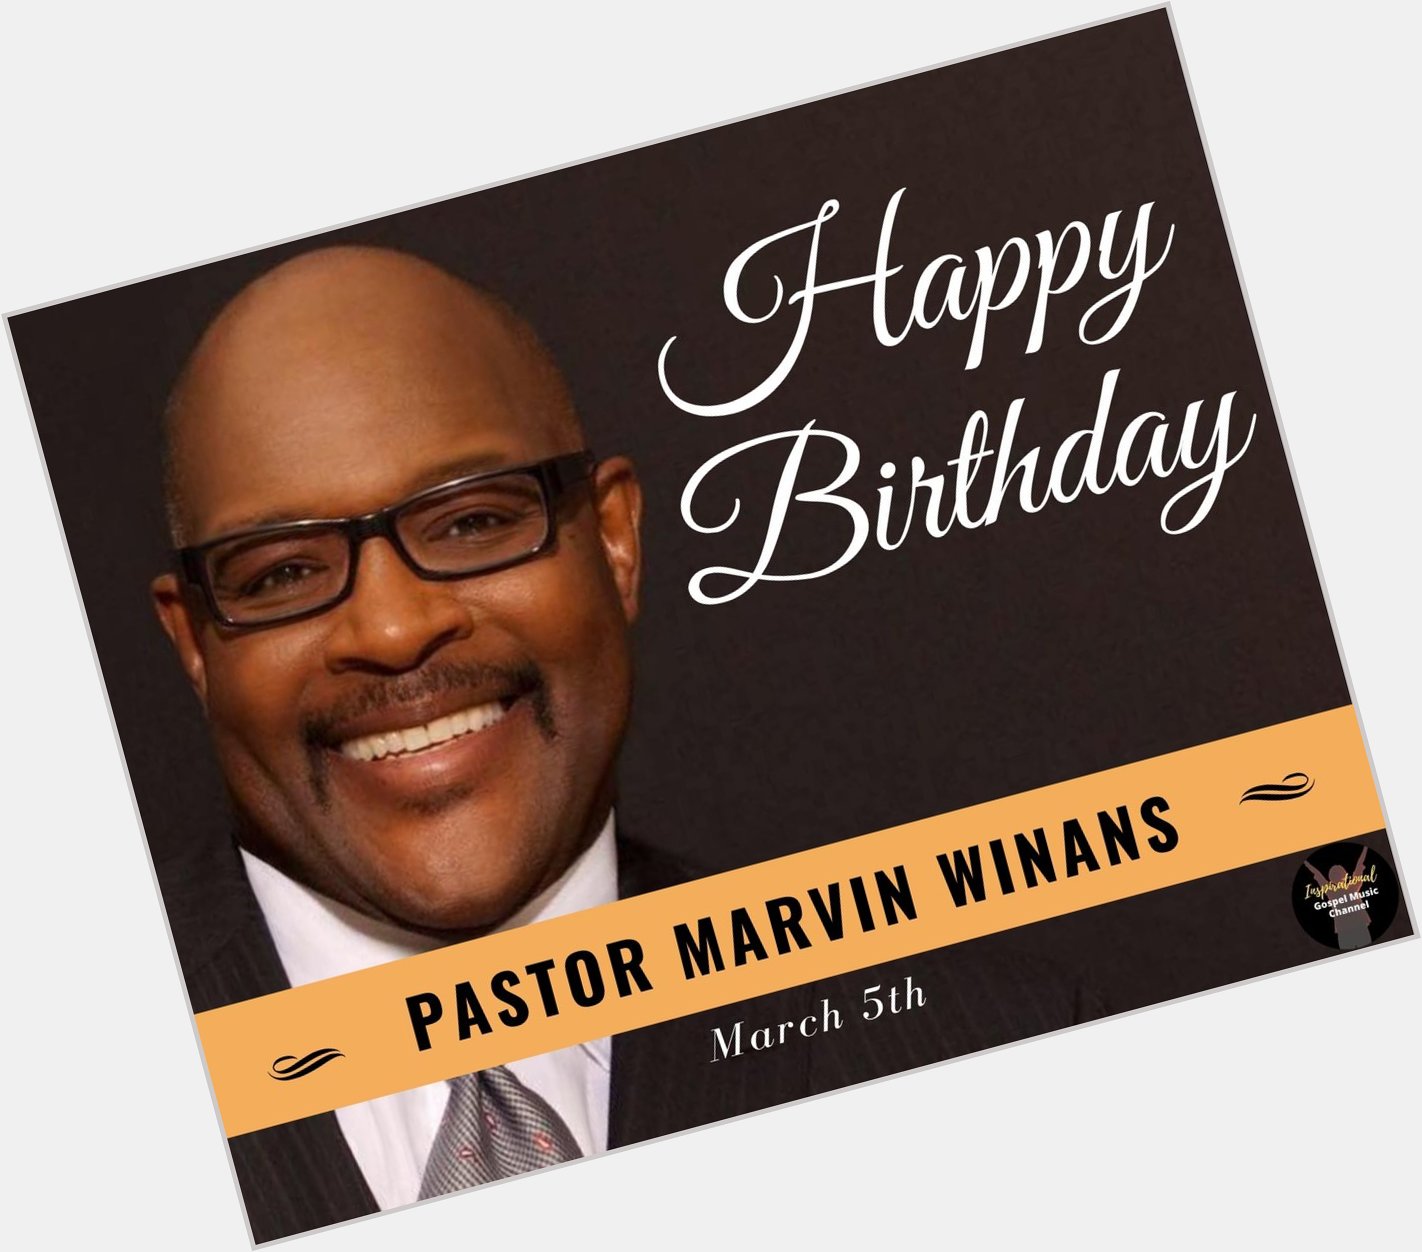 Happy Birthday Pastor Marvin Winans! 
*
*     